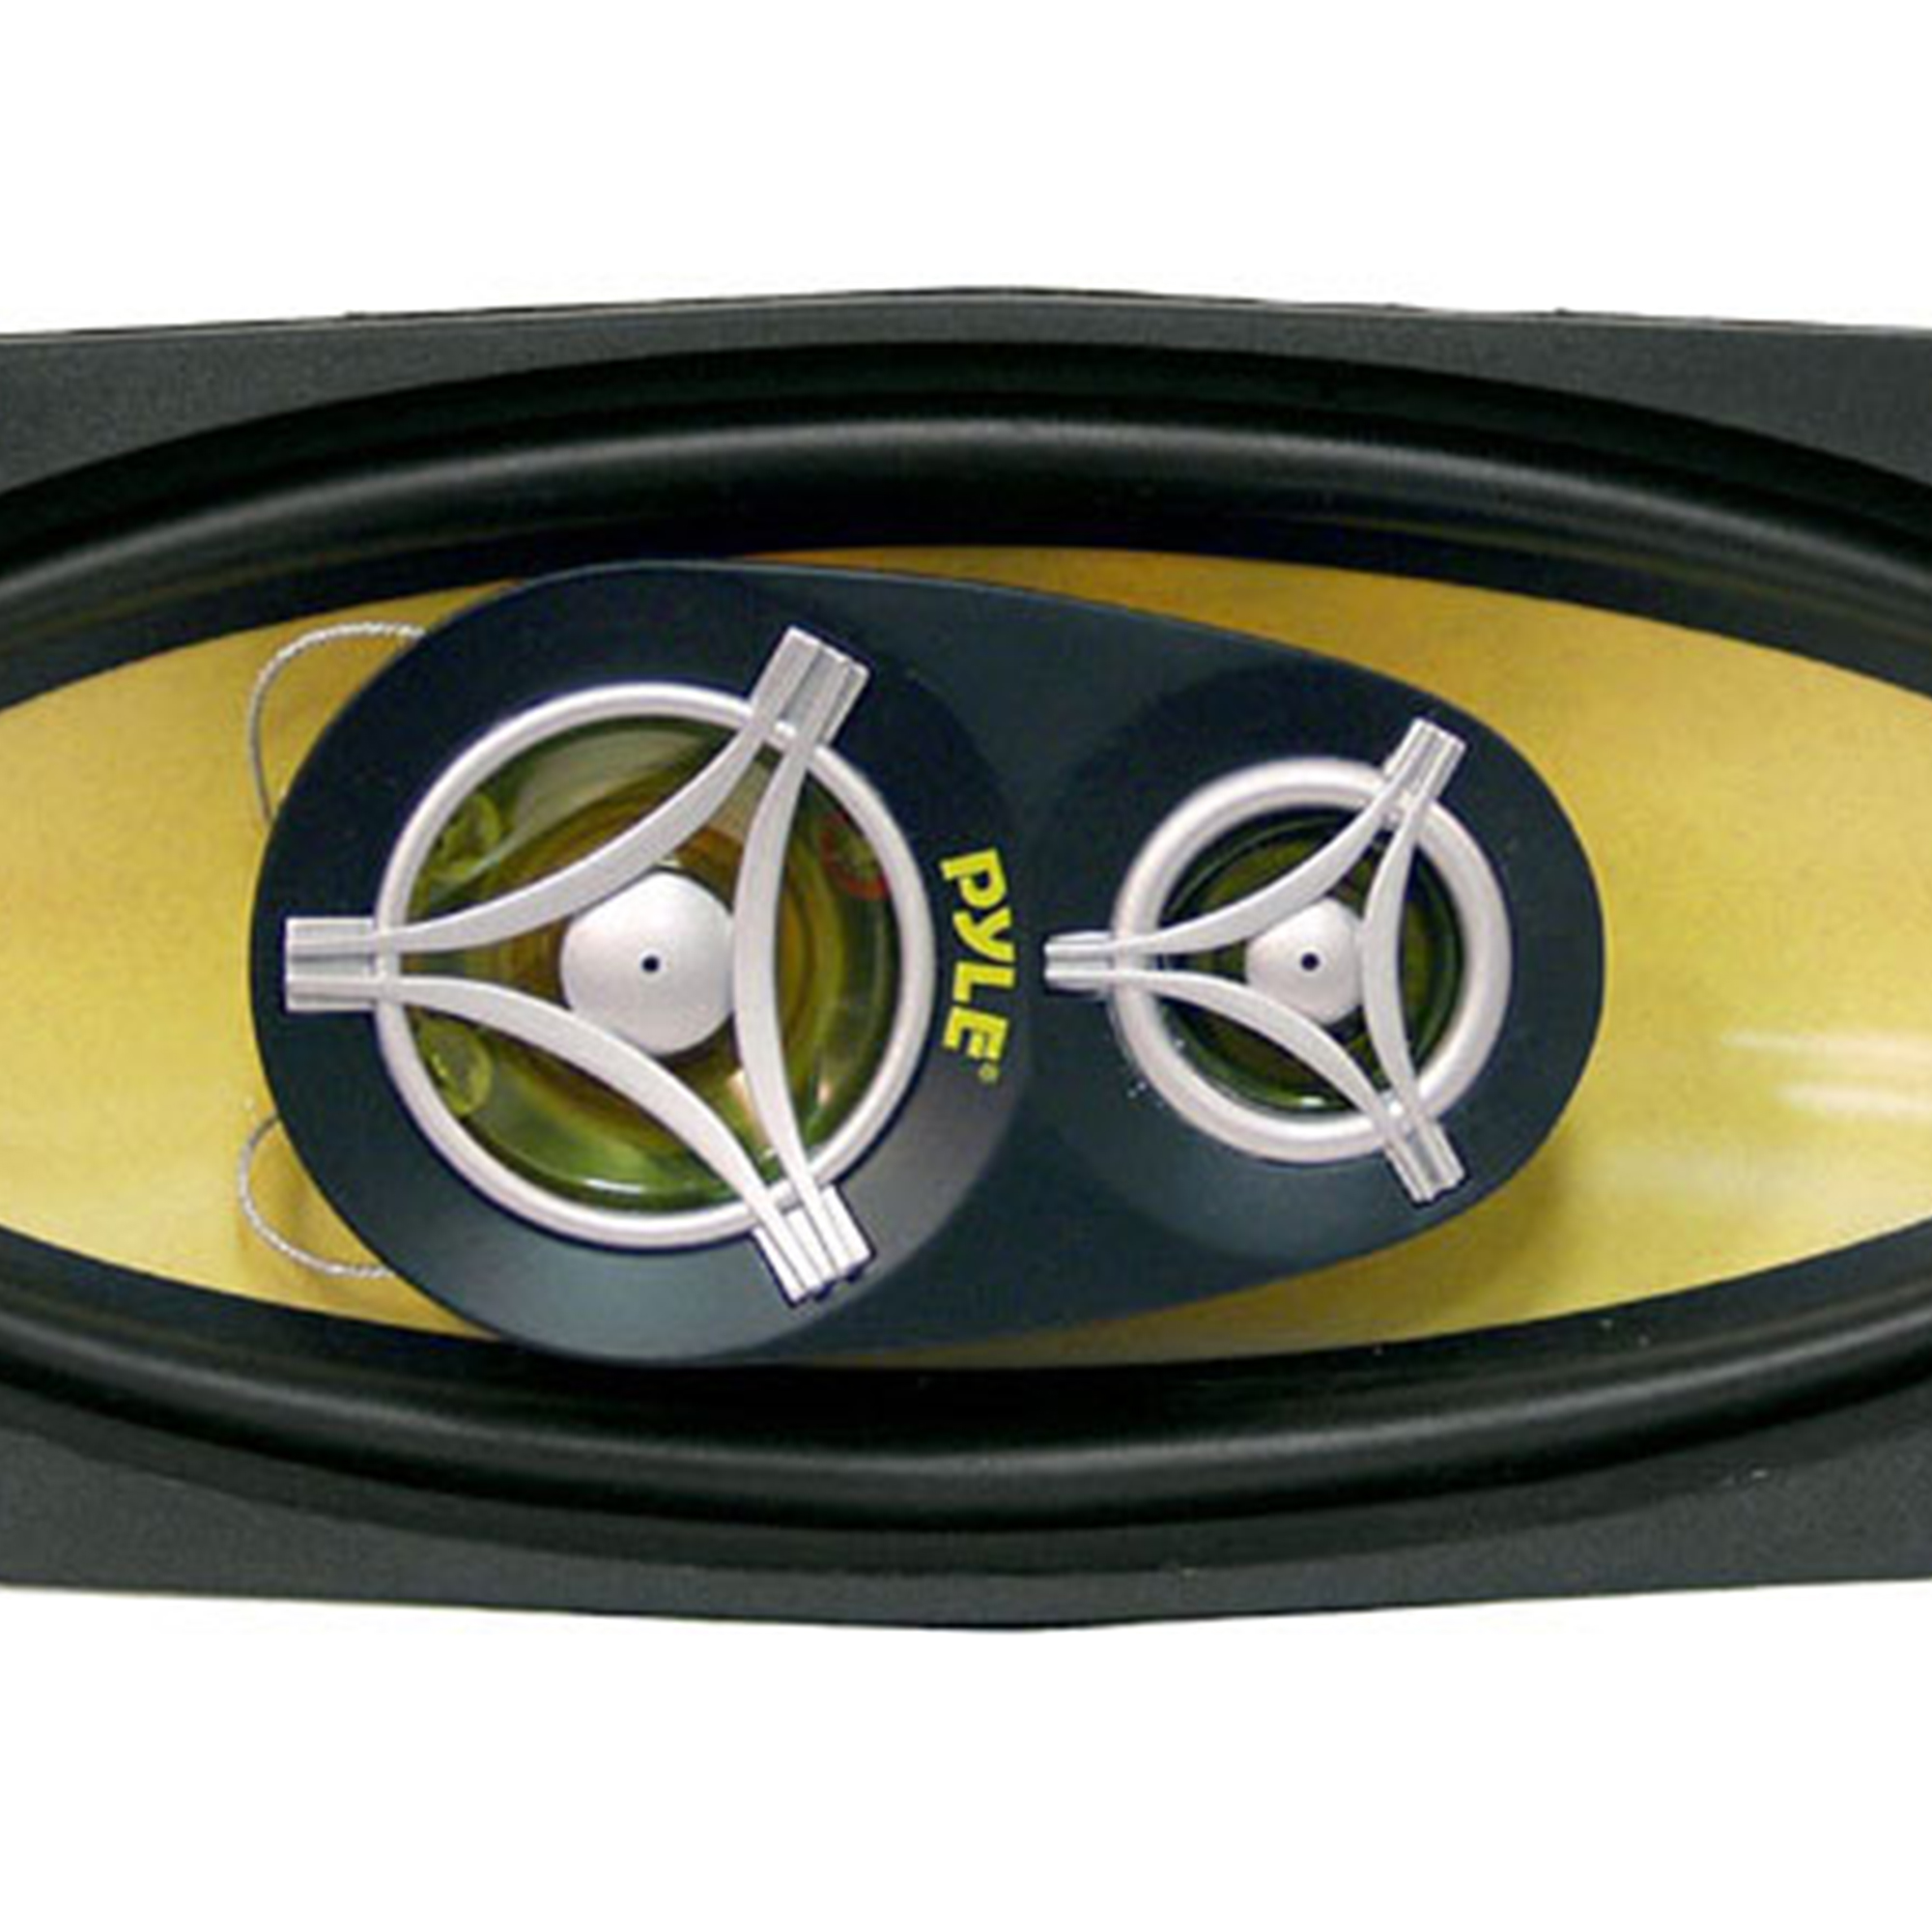 PYLE PLG413 - 4”x 10” Inch Three Way Sound Speaker System - Yellow Poly Cone Pro Loud Range Audio 300 Watt Peak Power Per Pair w/ 4 Ohm Impedance - image 2 of 3